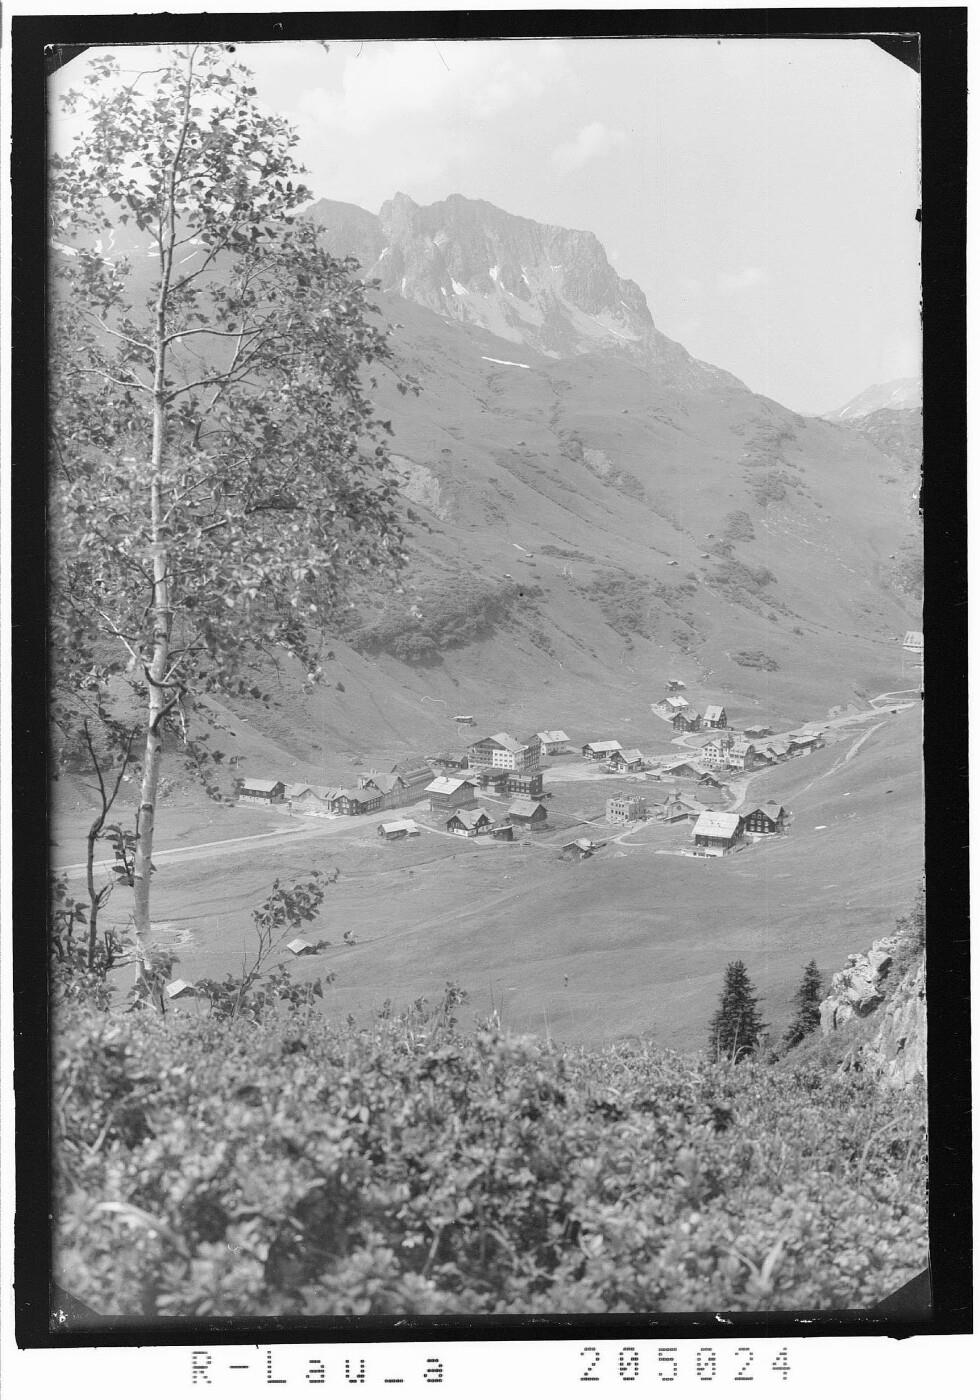 Zürs am Arlberg 1720 m gegen Omeshorn 2472 m